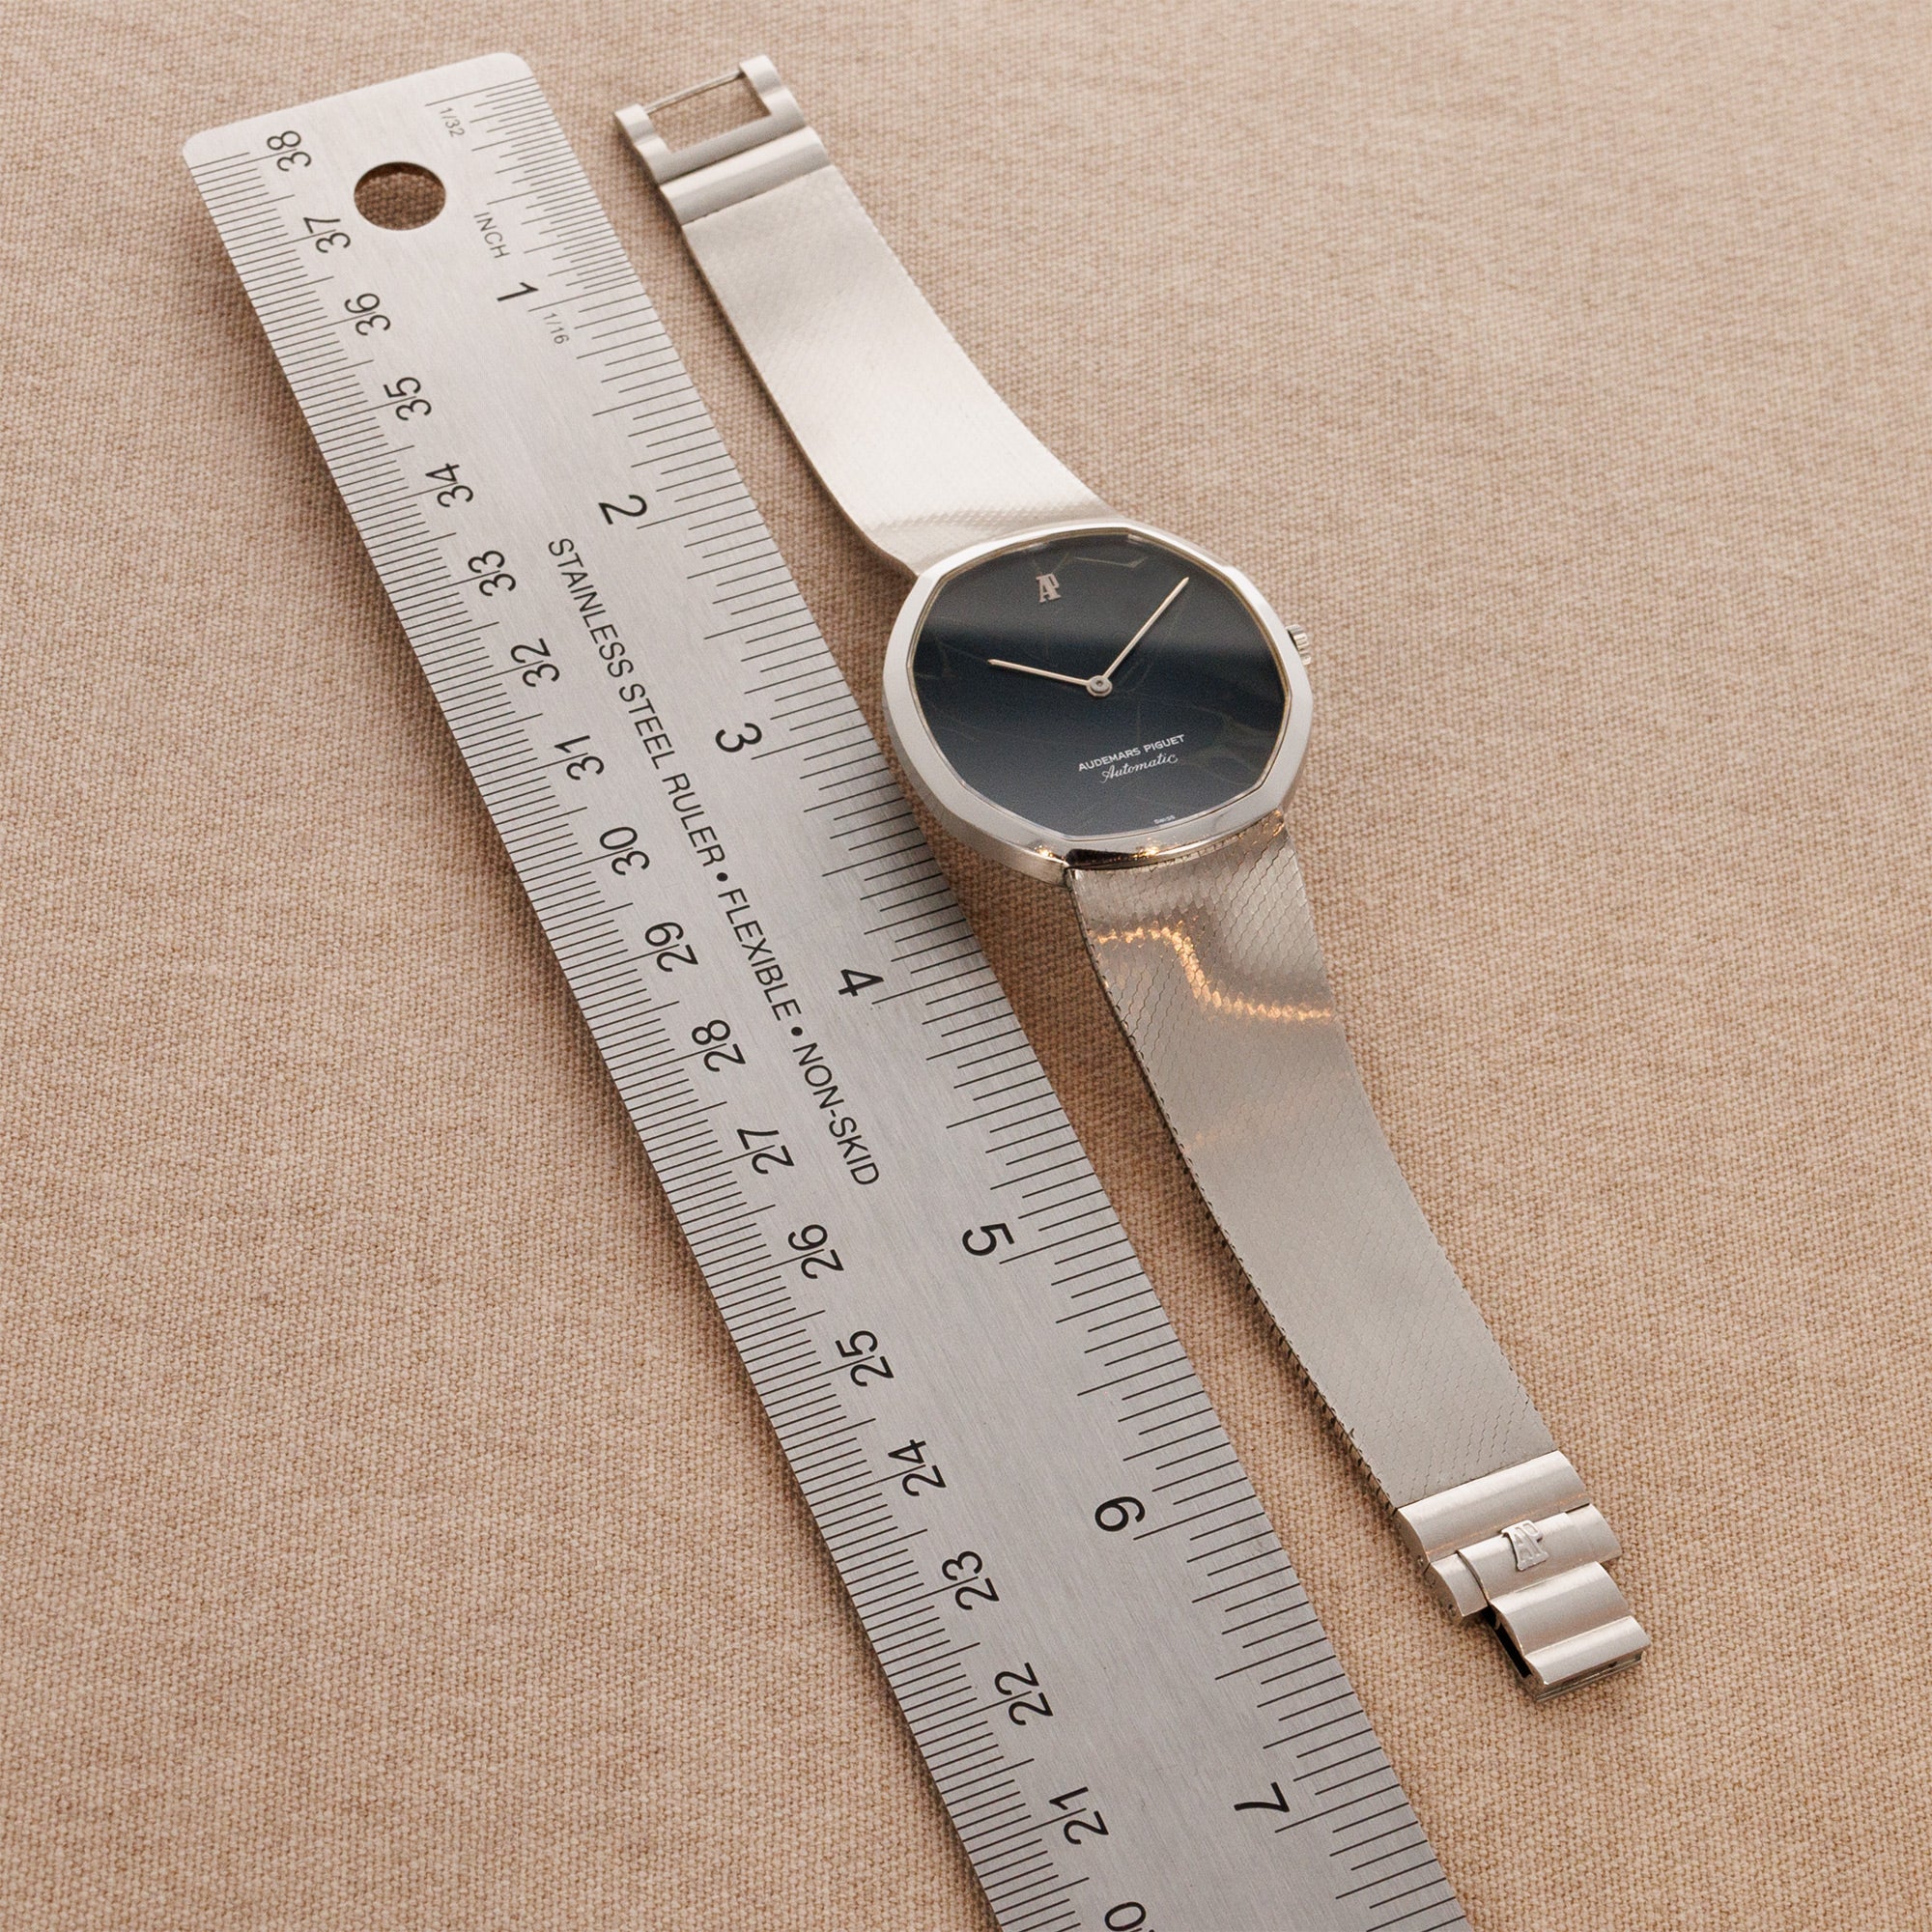 Audemars Piguet - Audemars Piguet Steel Unusual Shaped Automatic Bracelet Watch Ref. 4010 - The Keystone Watches